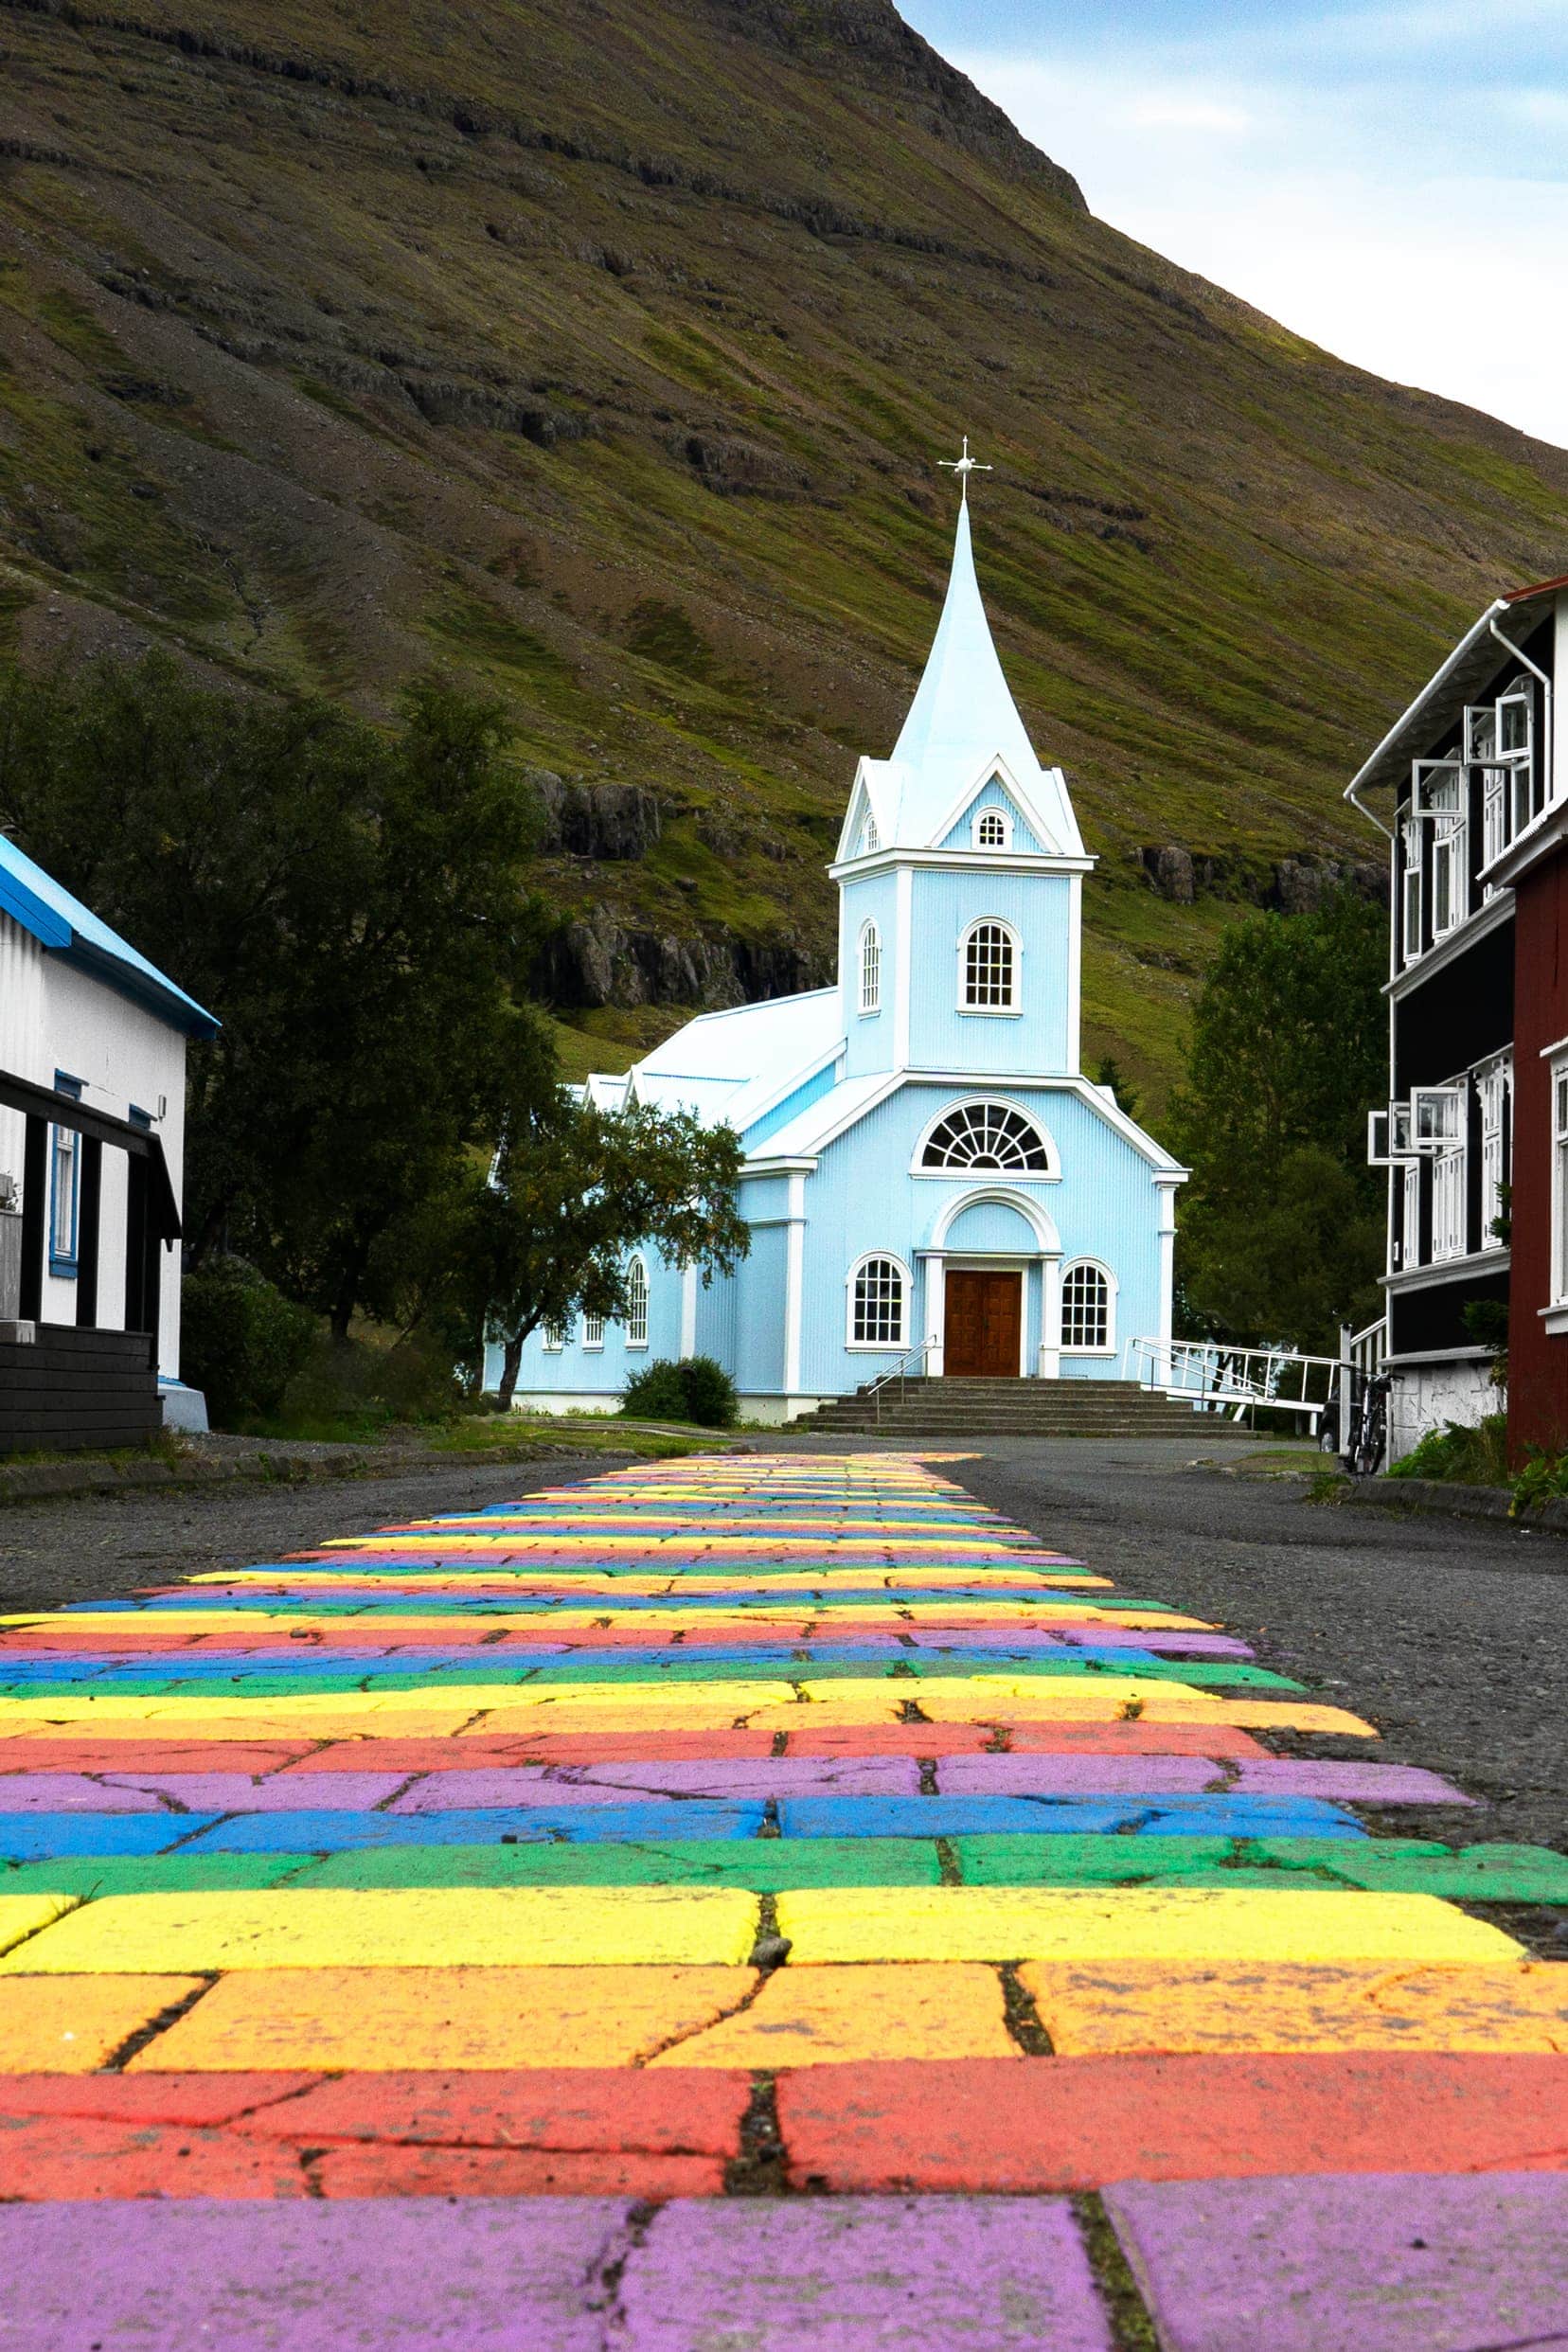 Blue church at the end of a rainbow path